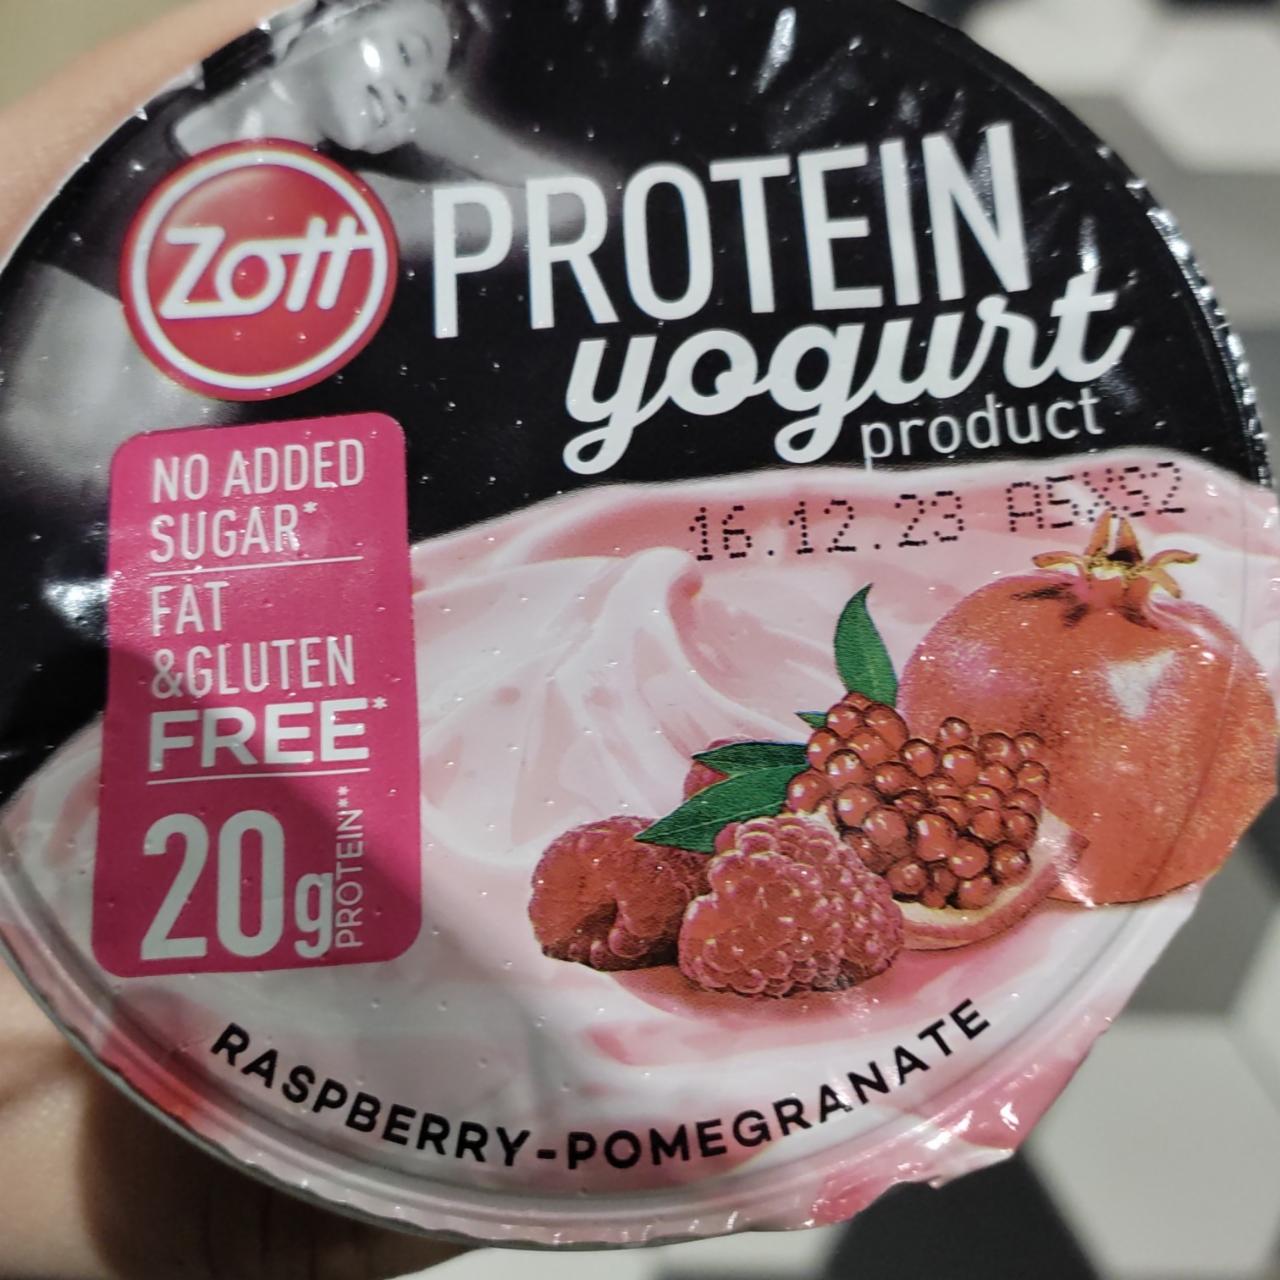 Fotografie - Protein yogurt product Raspberry - Pomegranate Zott